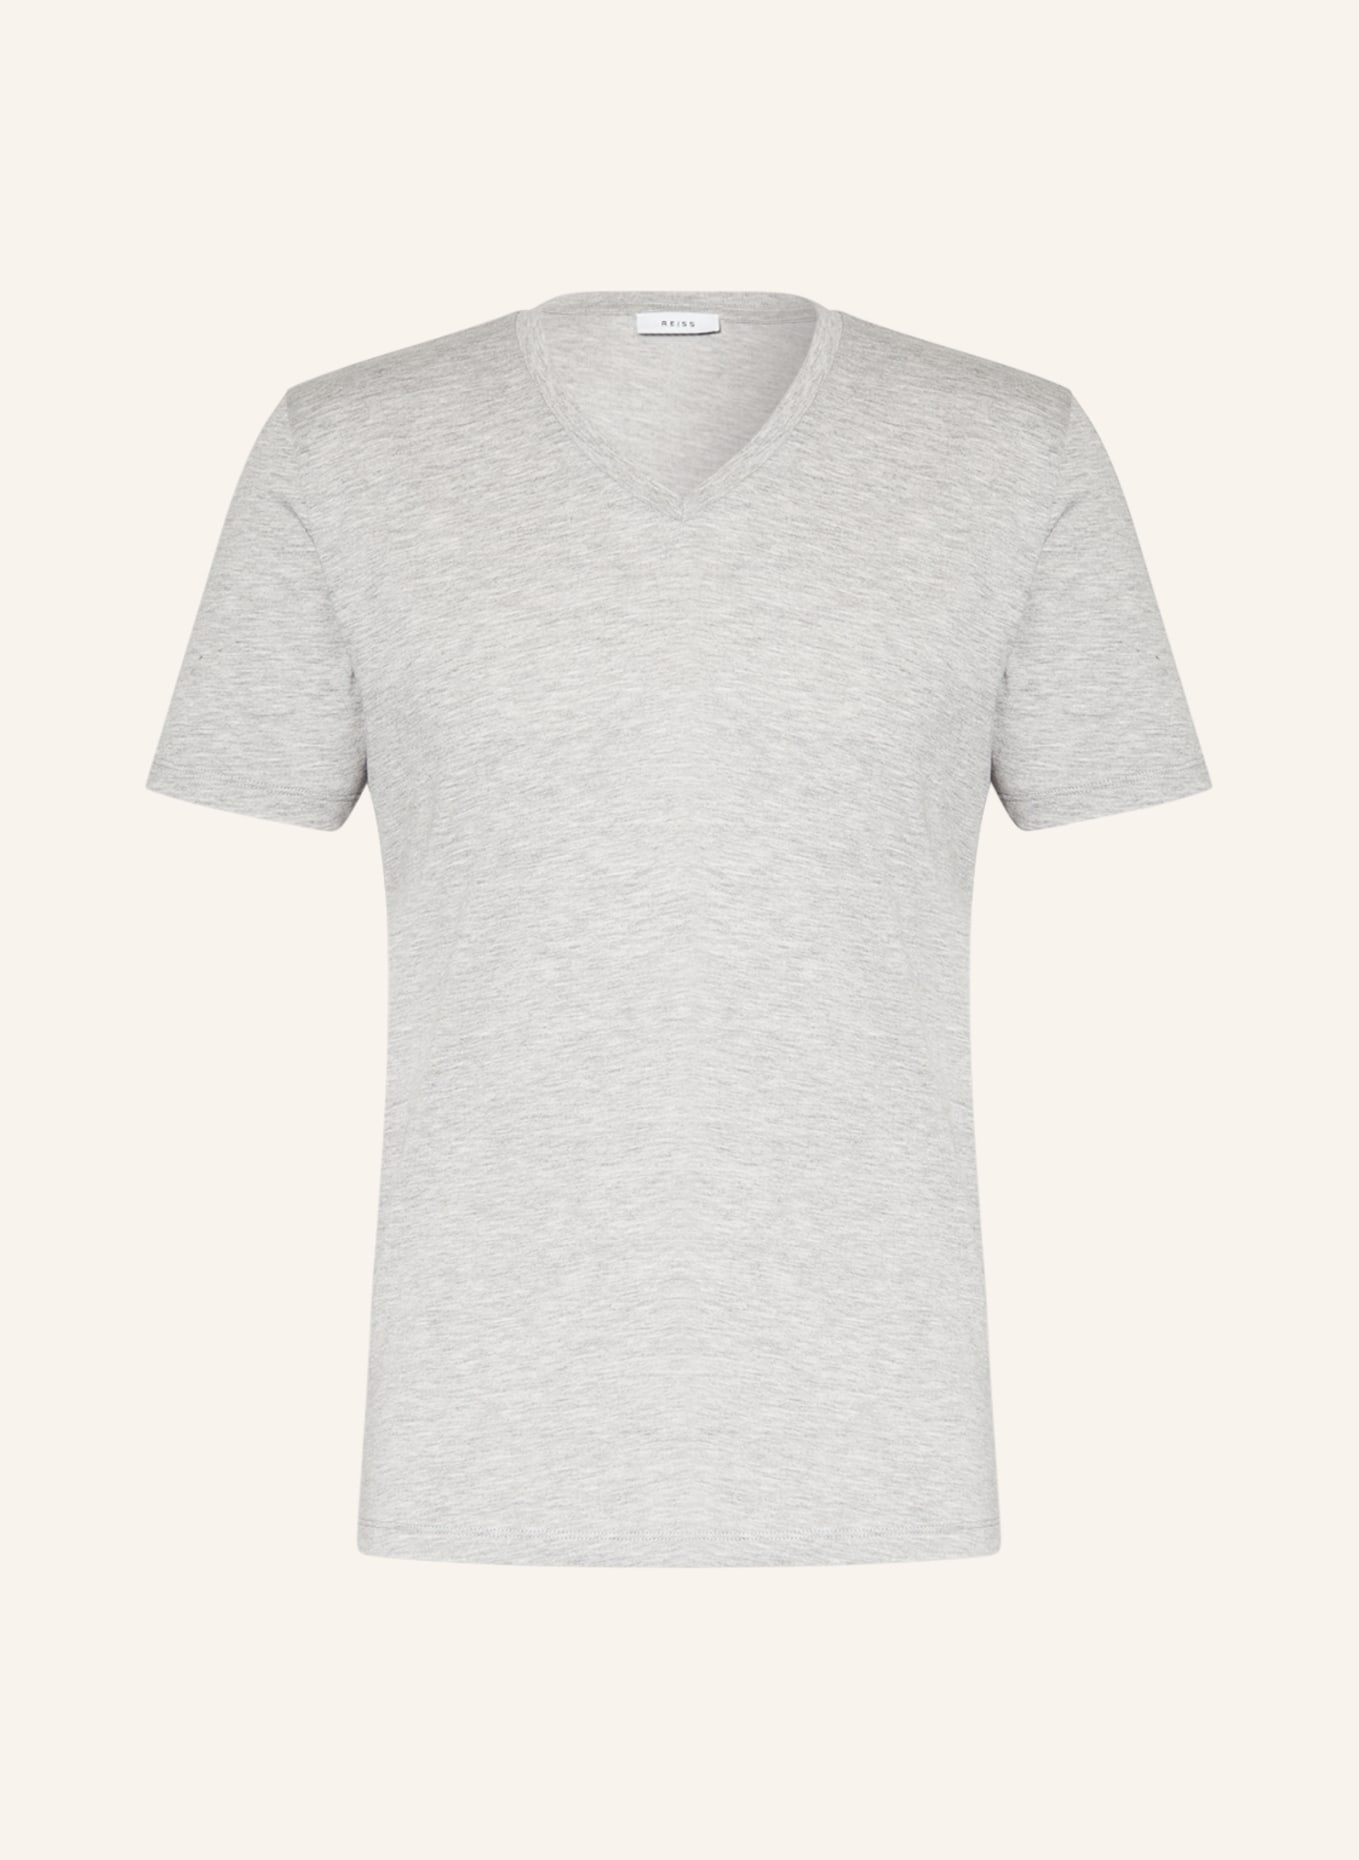 REISS T-Shirt DAYTON, Farbe: GRAU (Bild 1)